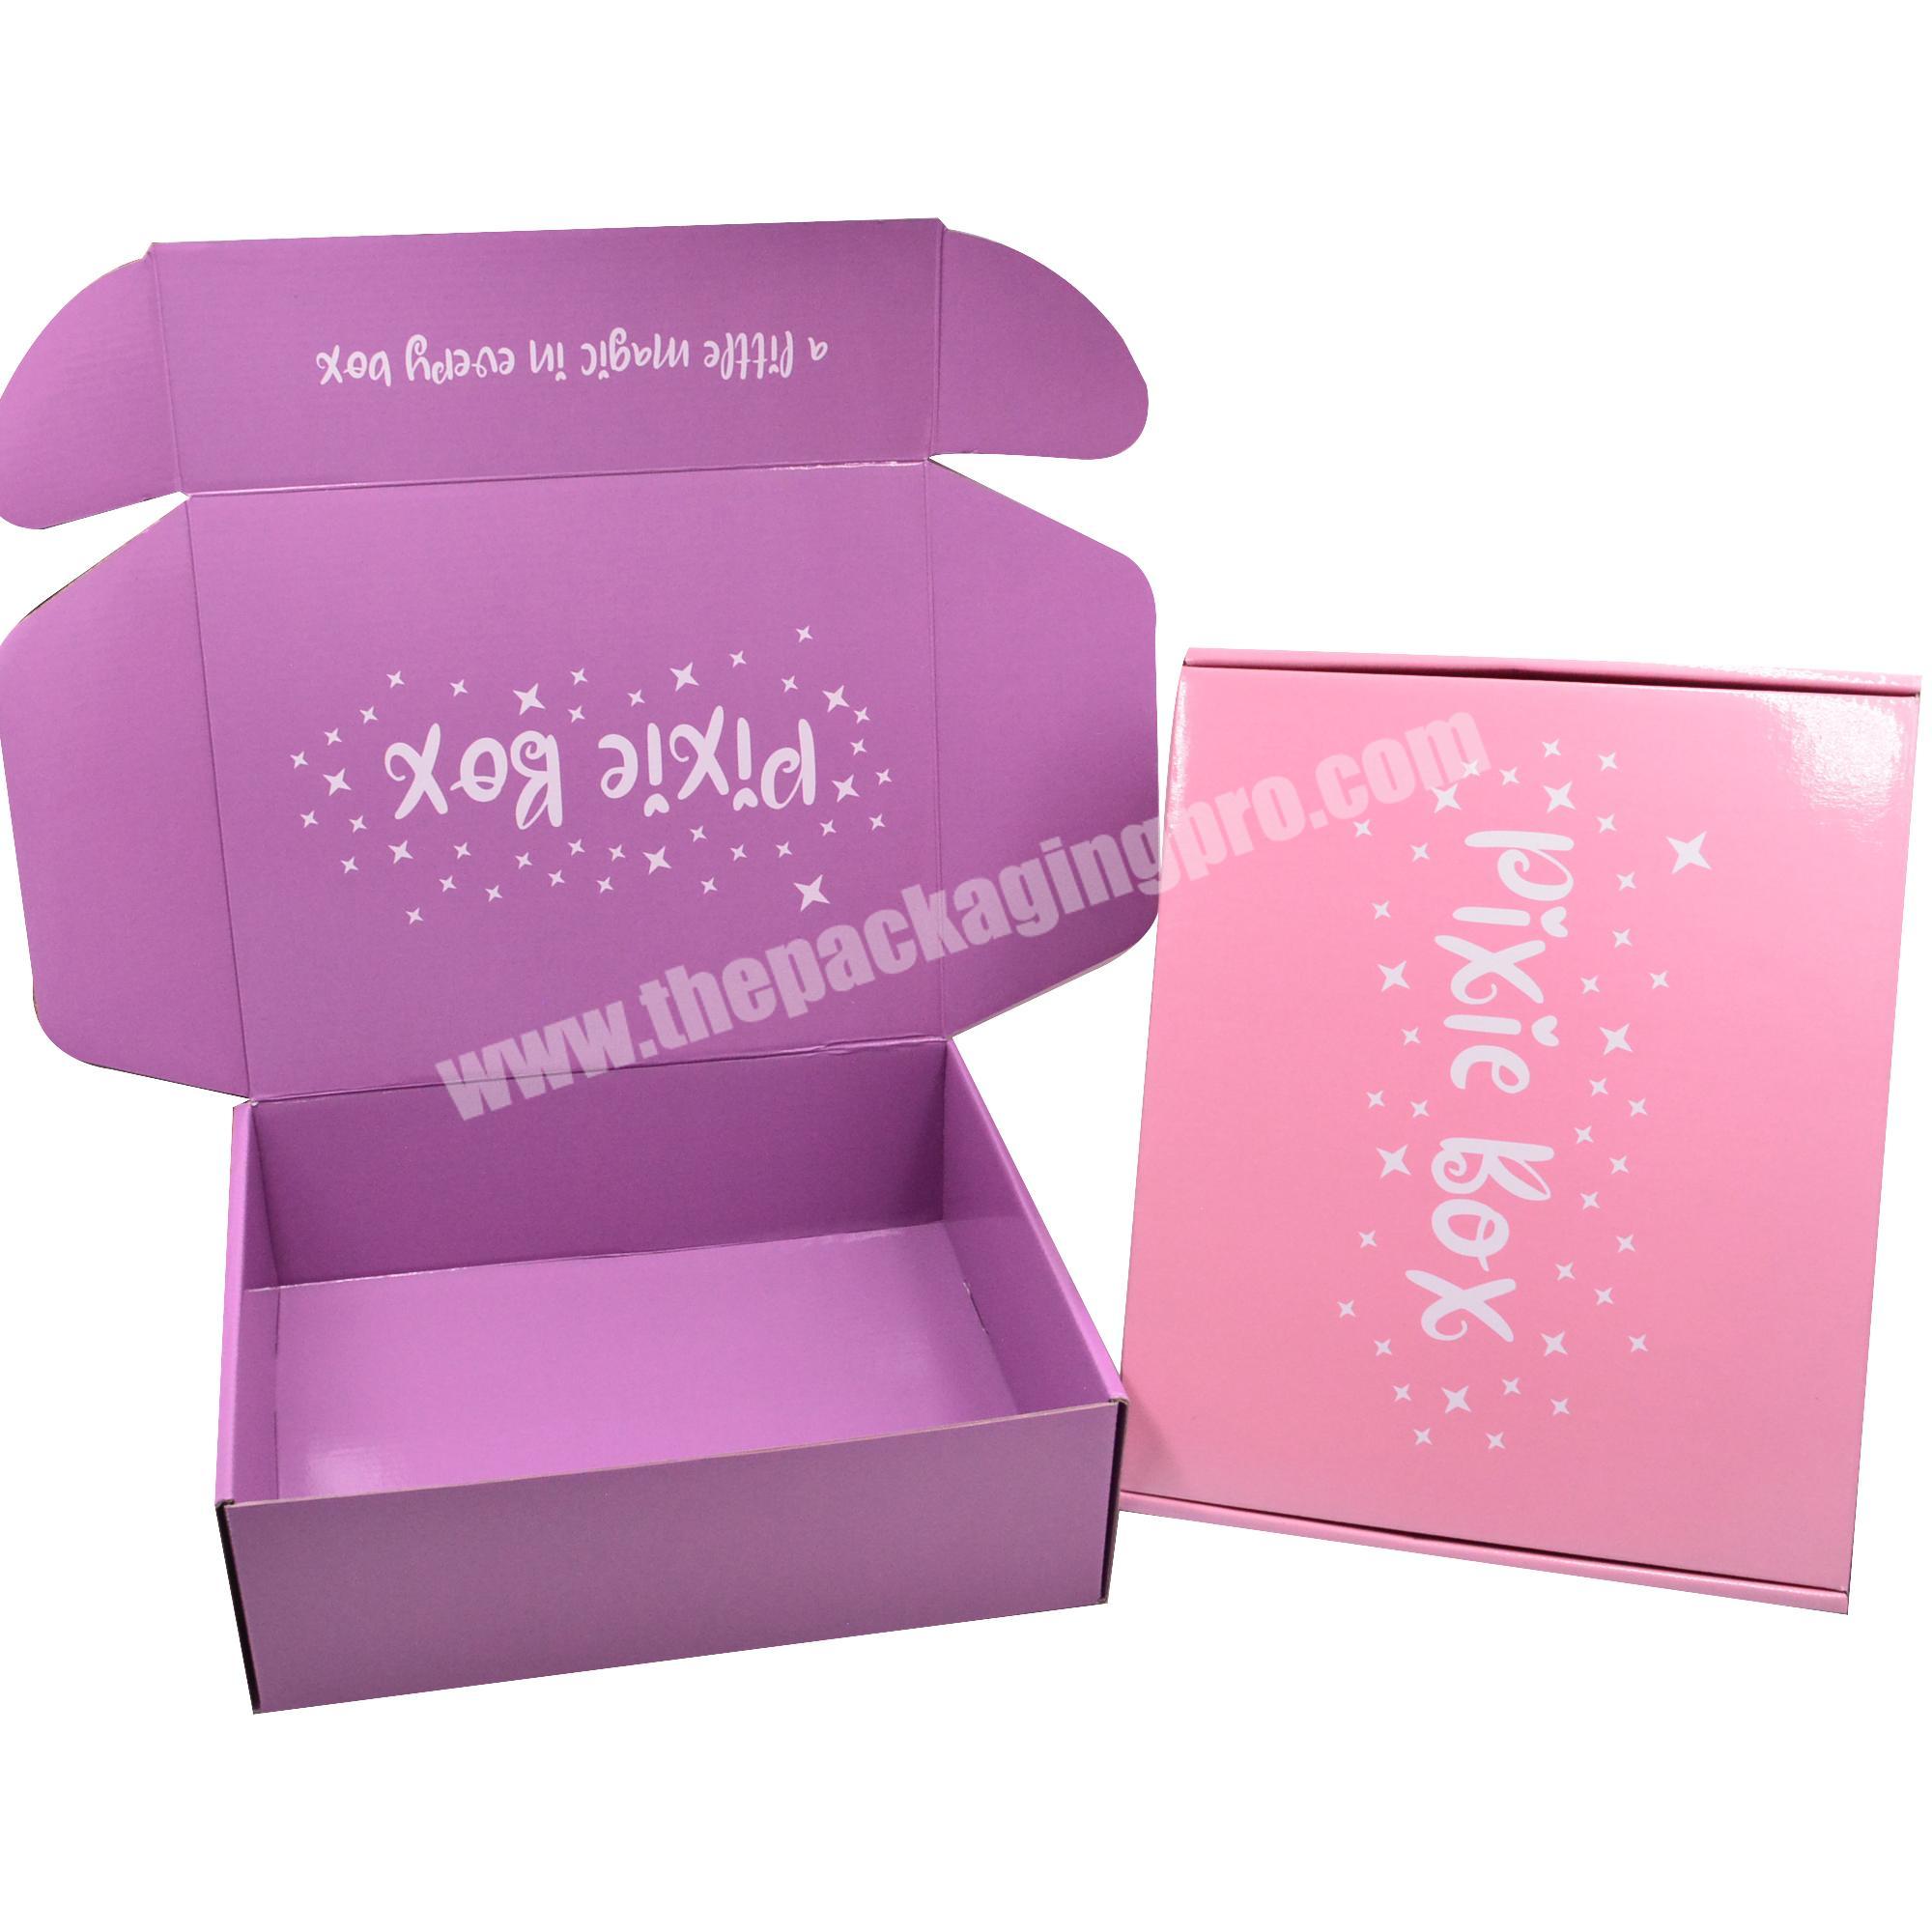 Wholesale Custom Printed Dress Soap Bra Packaging Box Corrugated Glossy Shipping Box Cardboard Mailer Box for Lipsticks Shirts